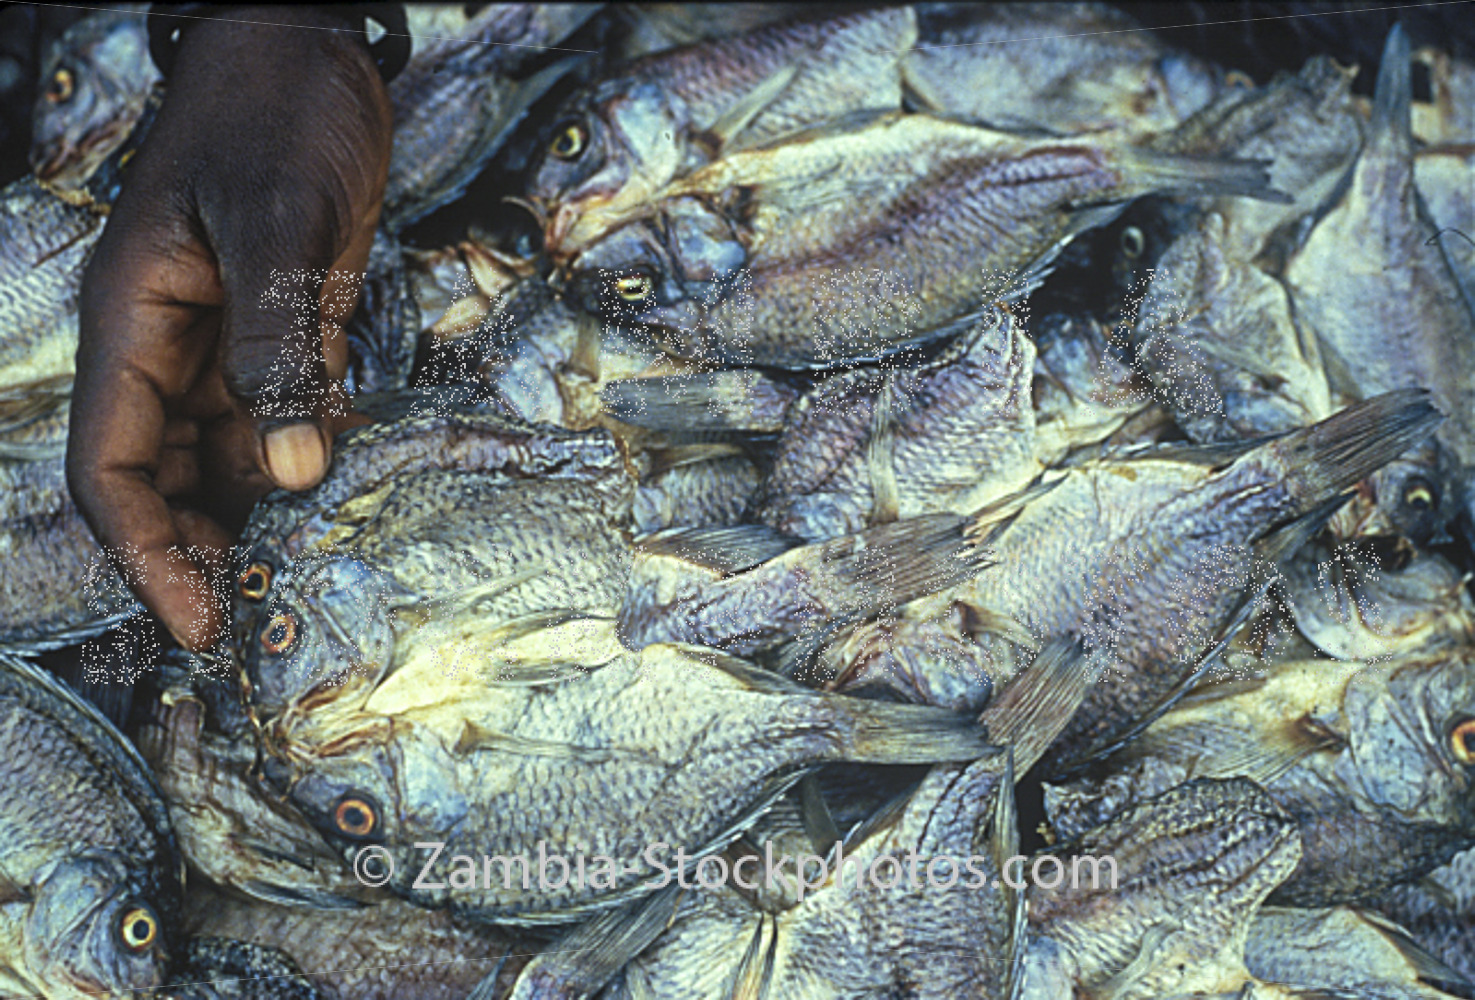 kafue fish.jpg - zambia-stockphotos.com